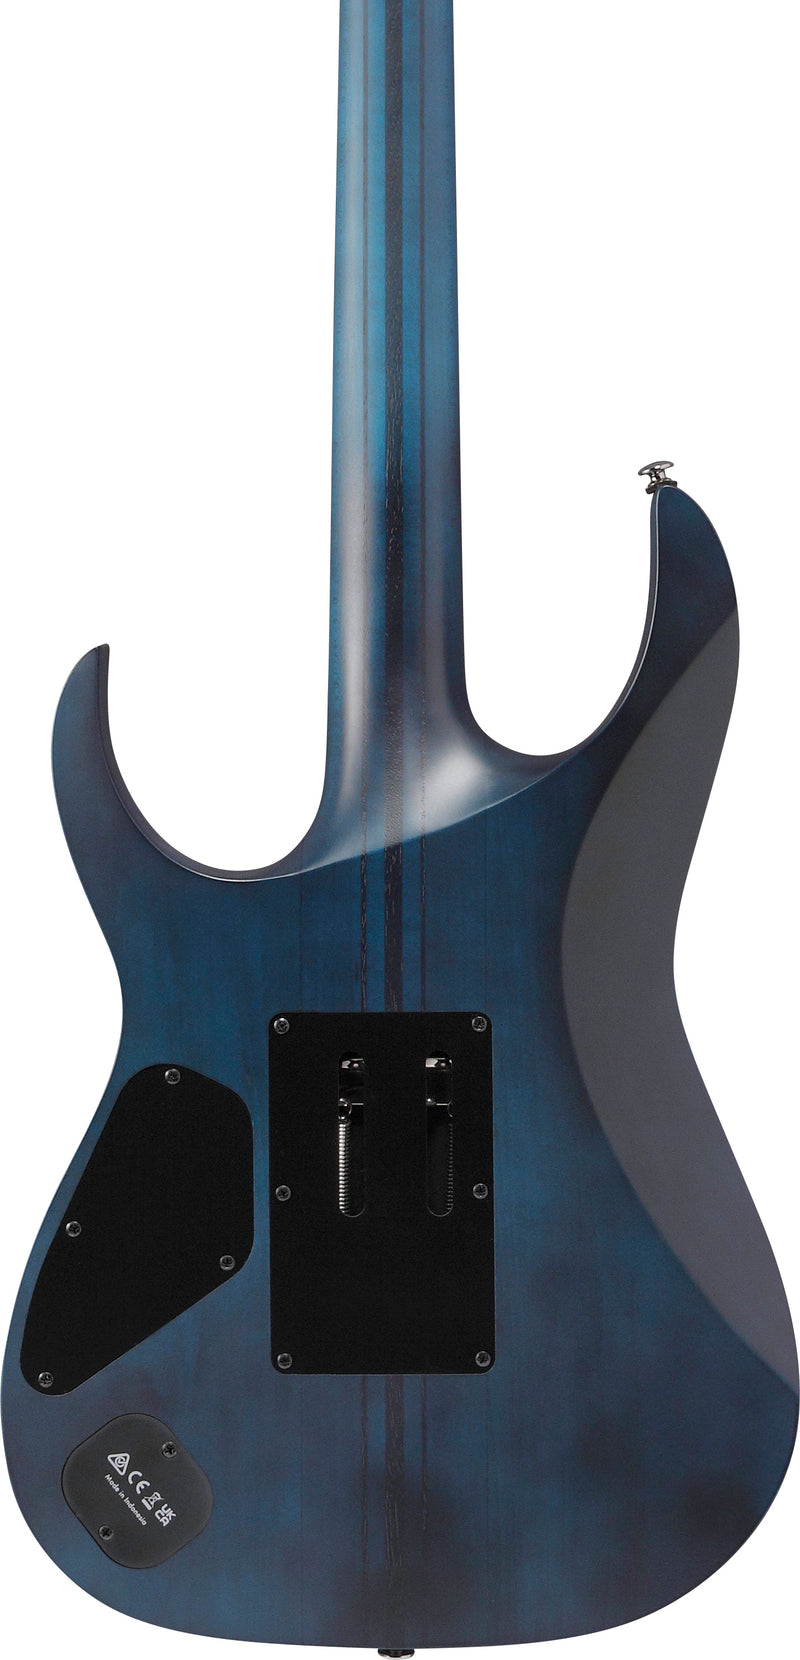 Ibanez RG PREMIUM Electric Guitar (Cosmic Blue Starburst Flat)